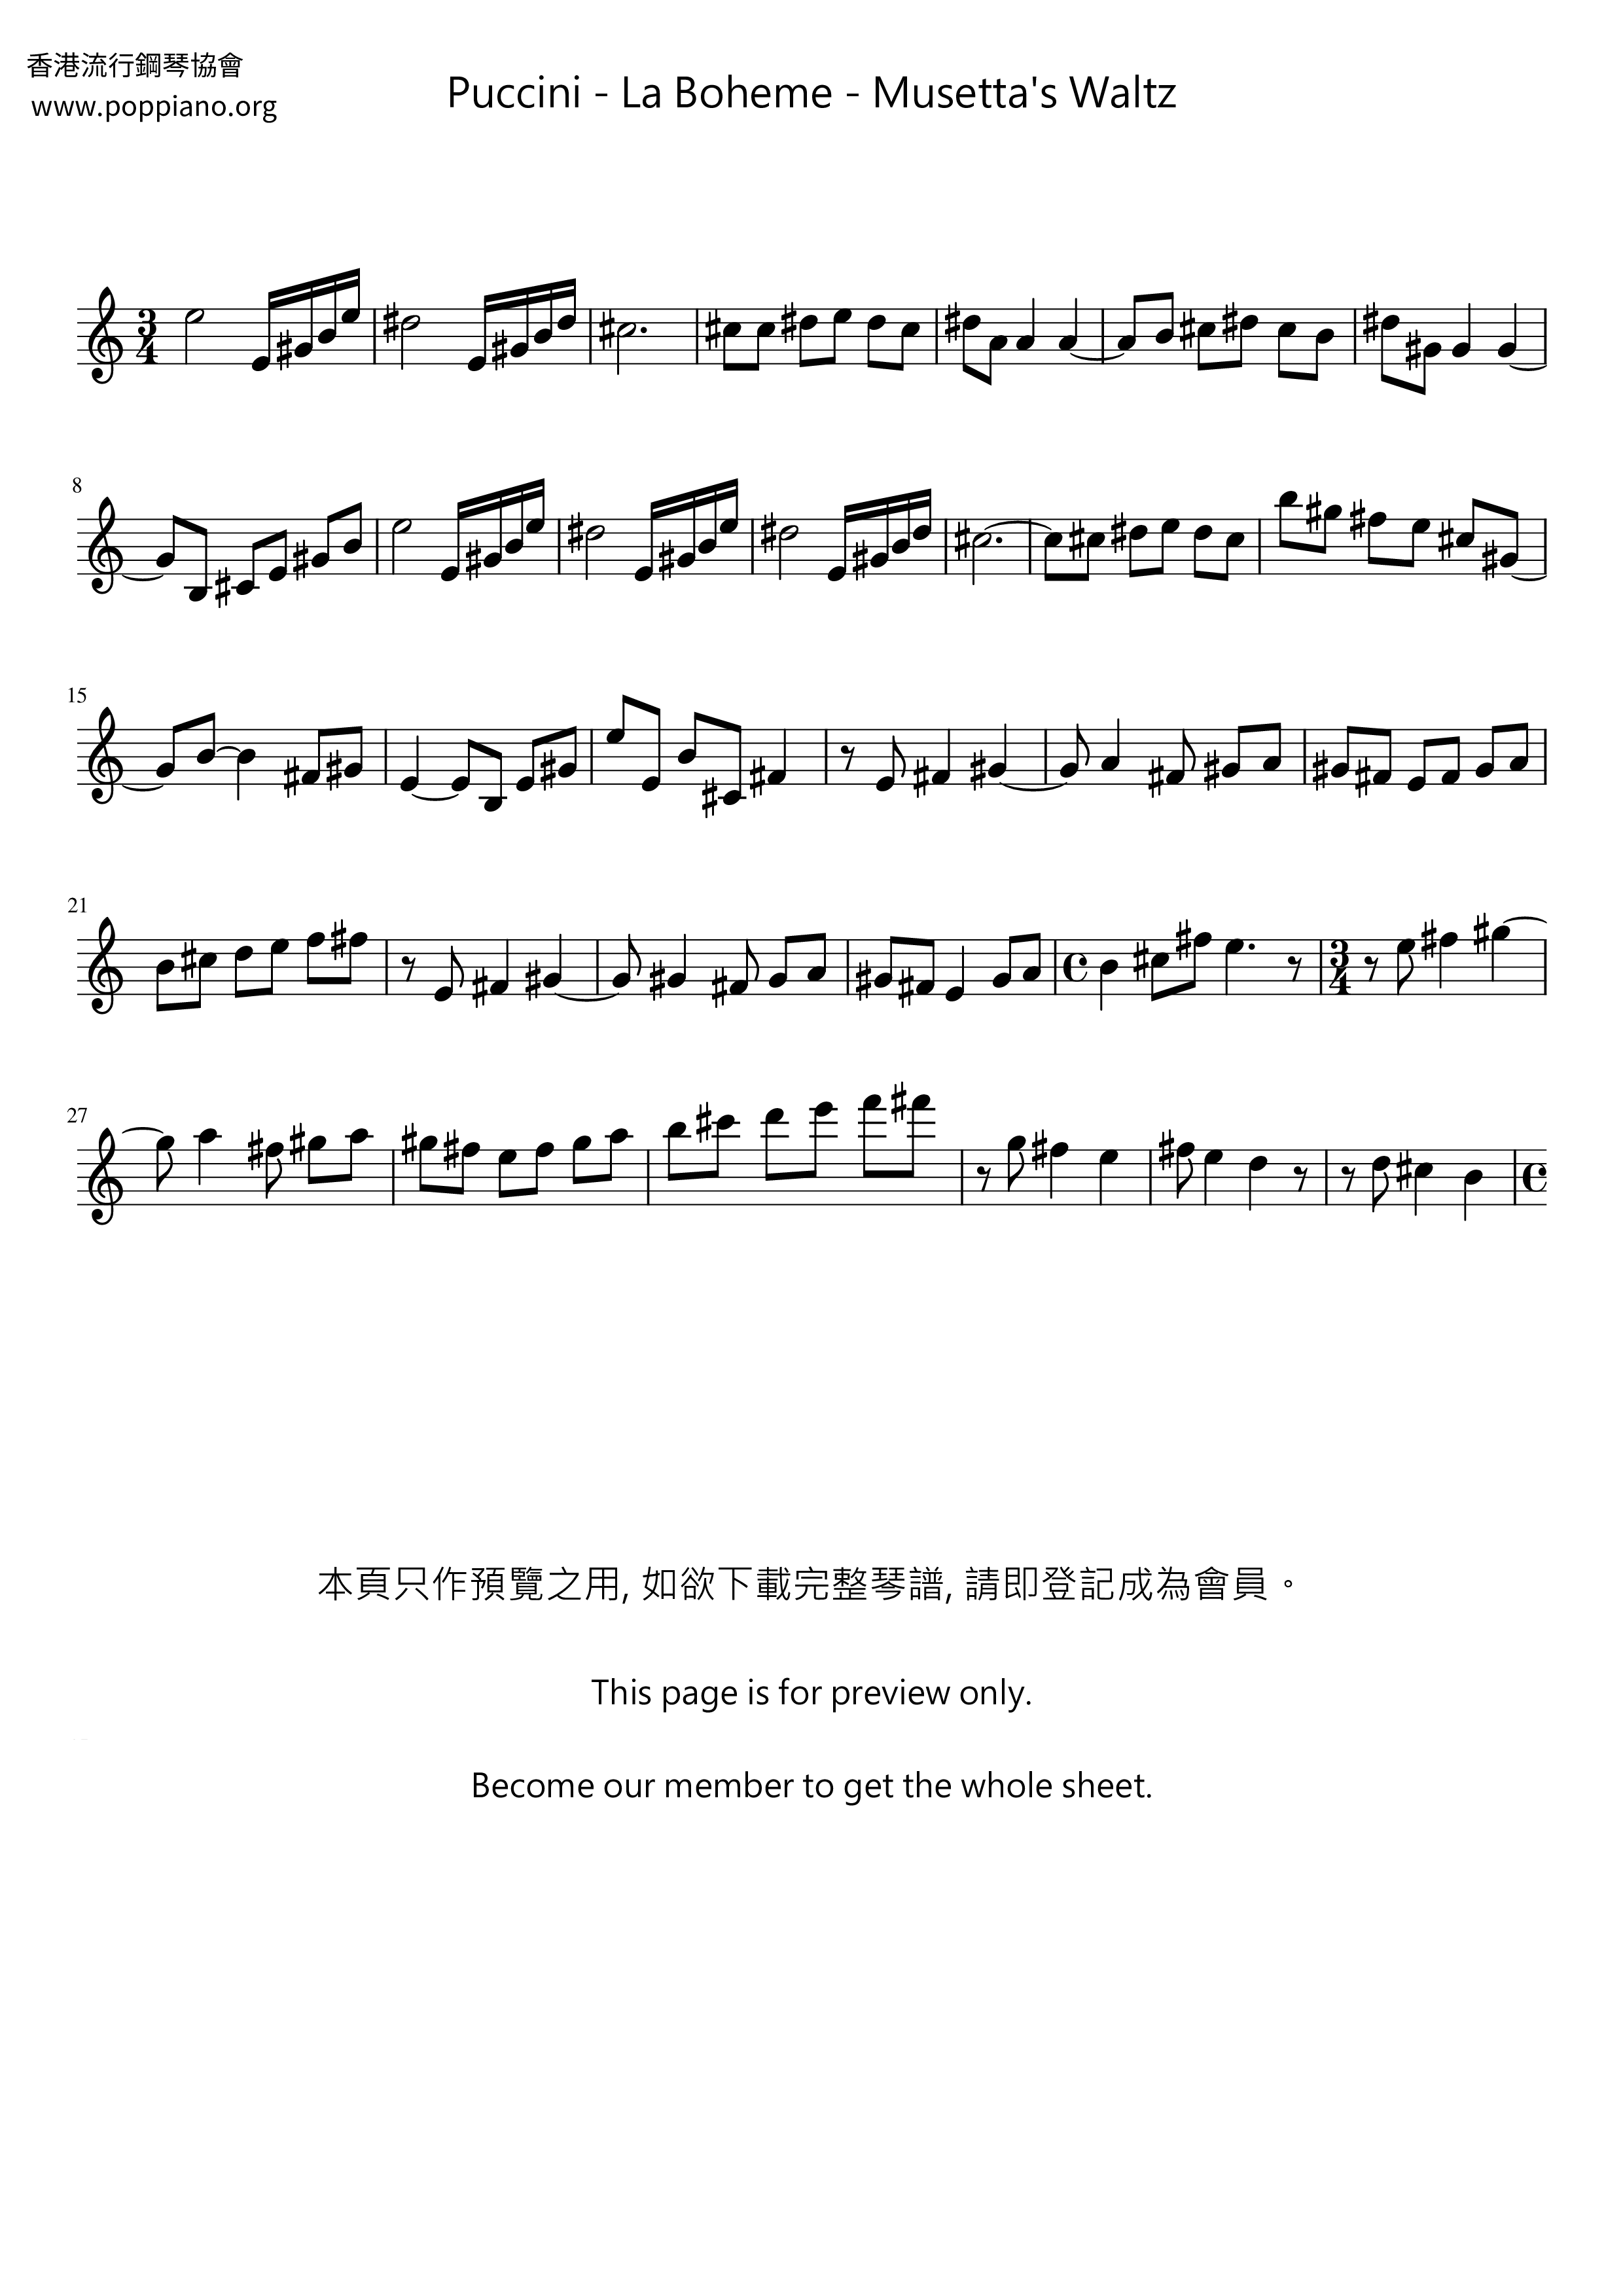 La Boheme - Musetta's Waltz Score